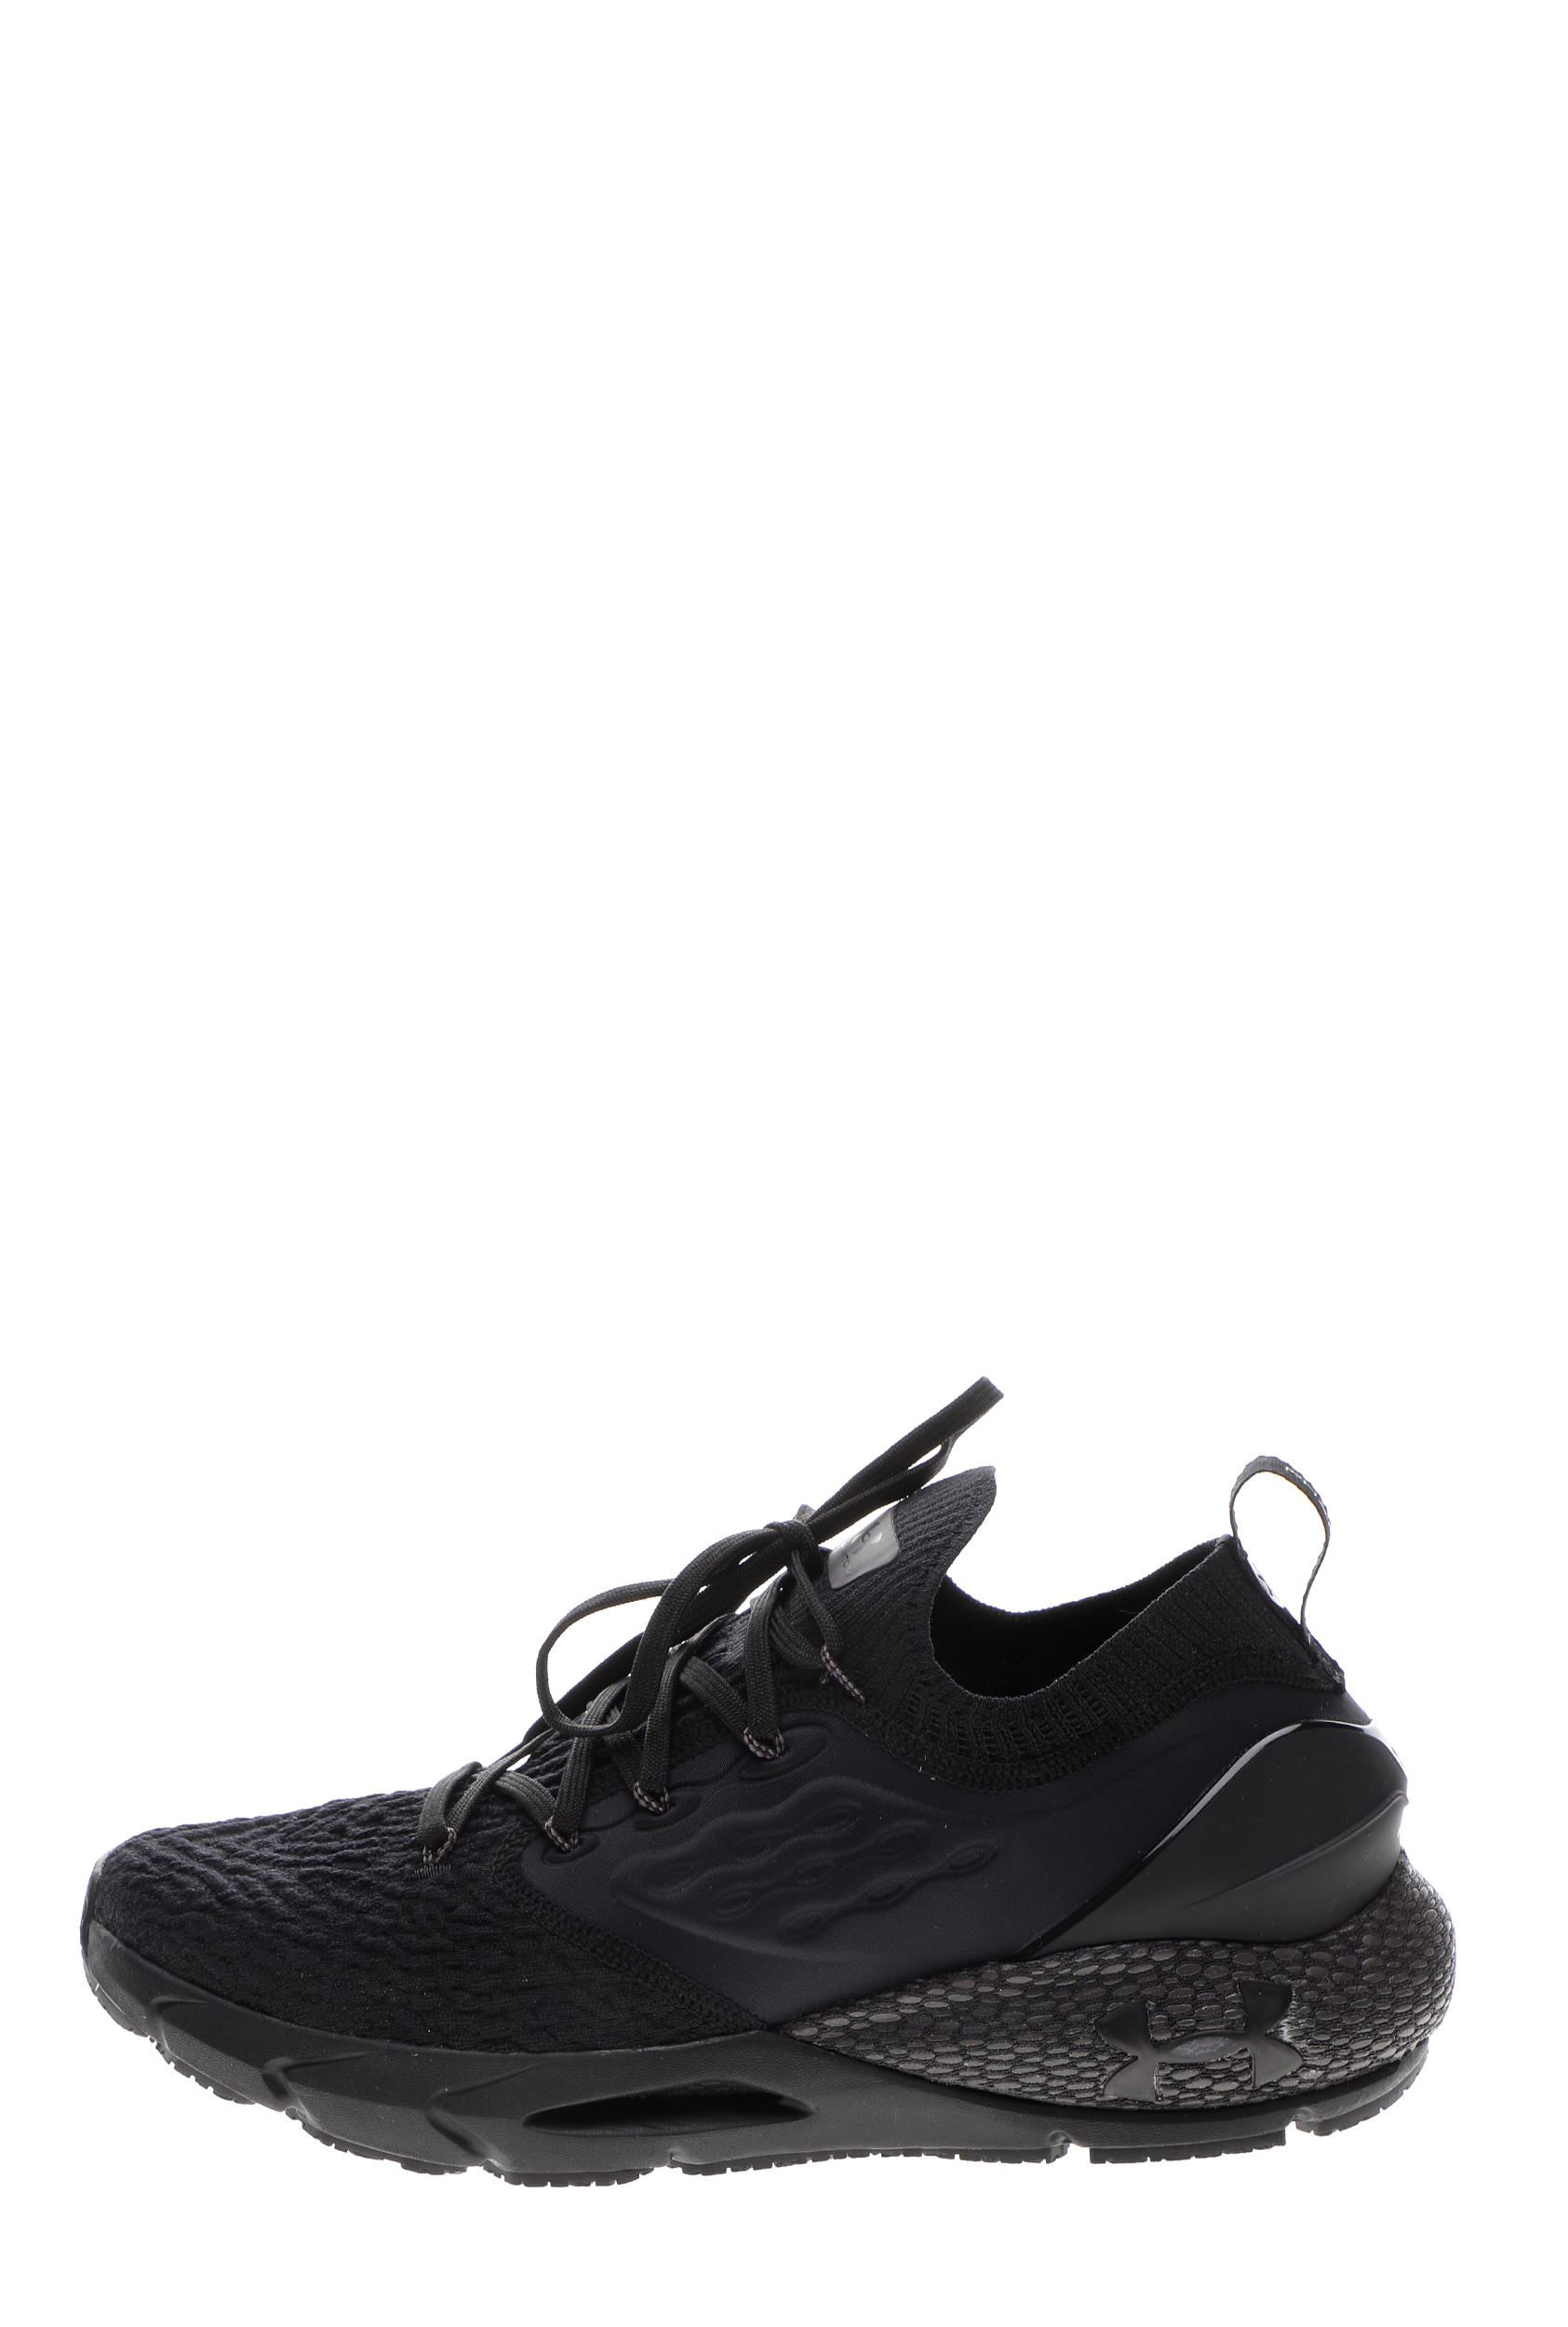 UNDER ARMOUR - Ανδρικά αθλητικά παπούτσια UA HOVR Phantom 2 μαύρα